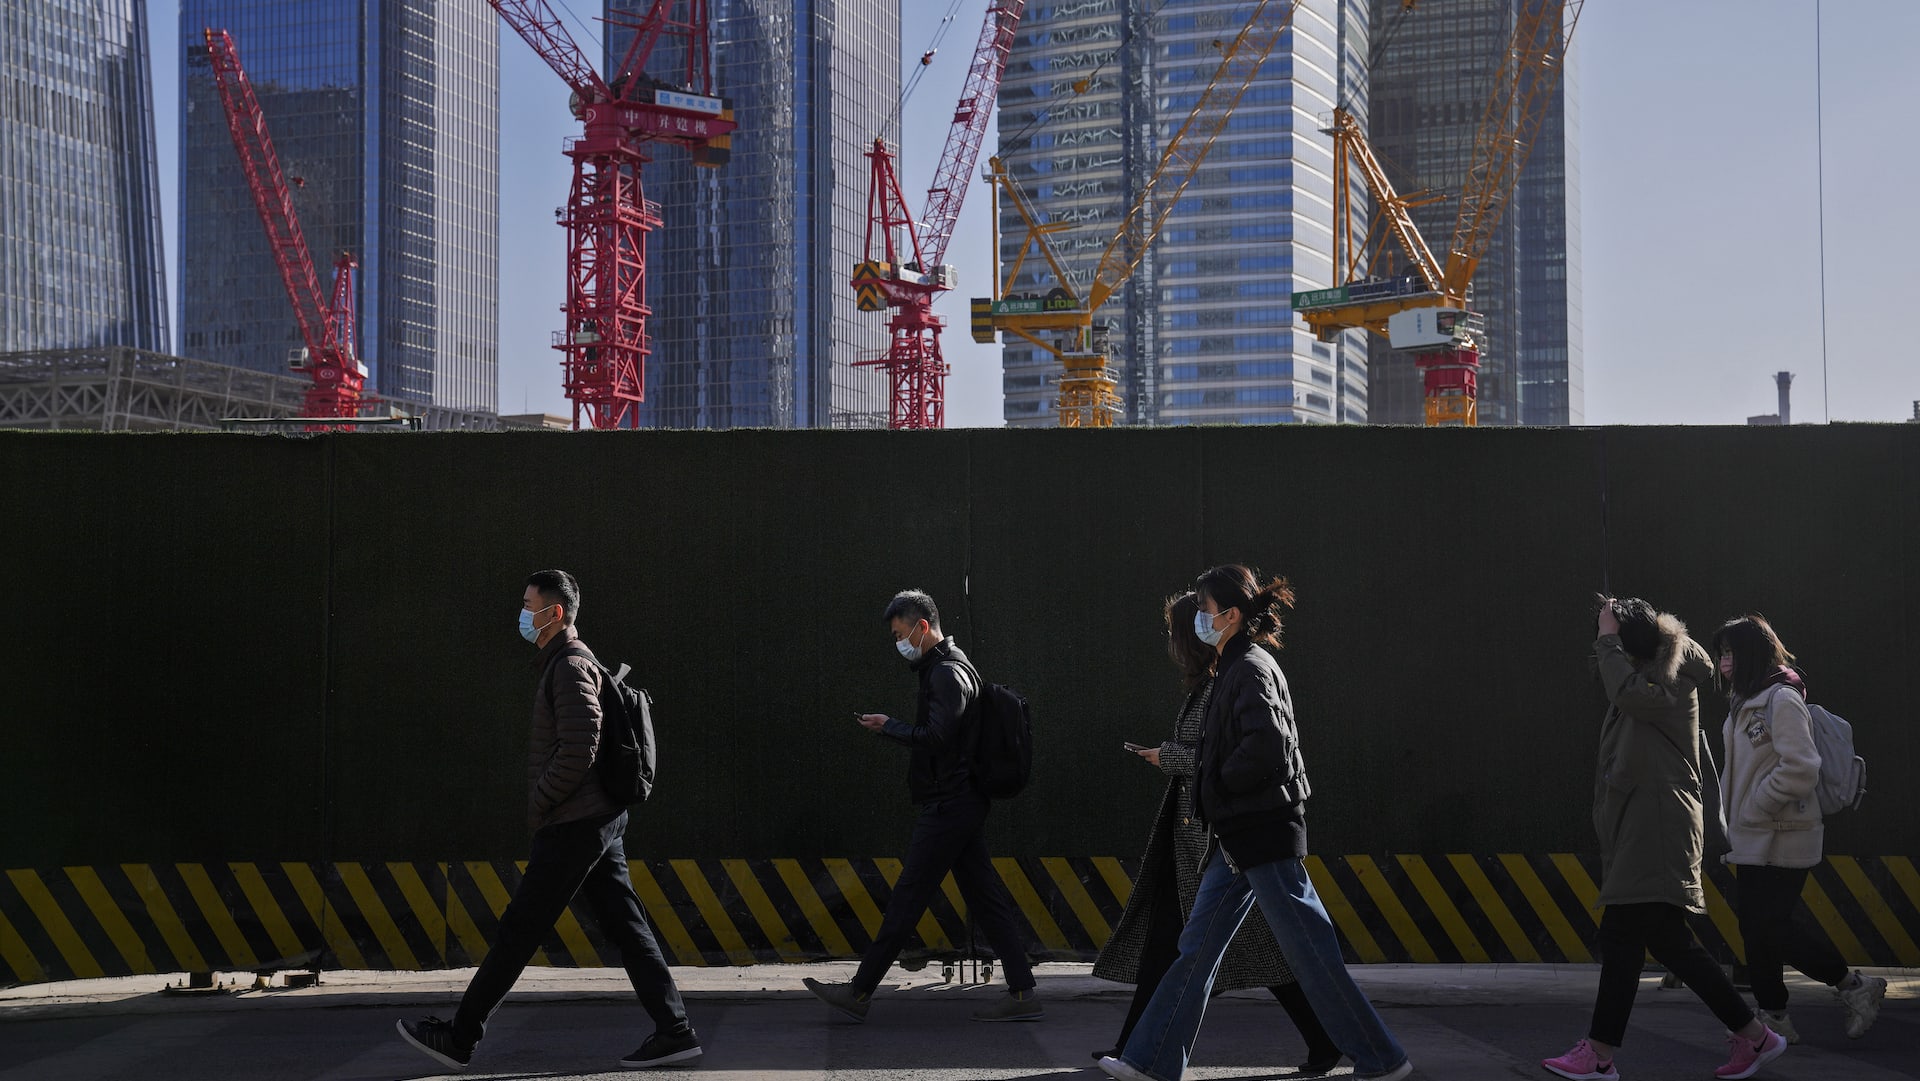 Diminishing returns on real estate threaten Chinese economic